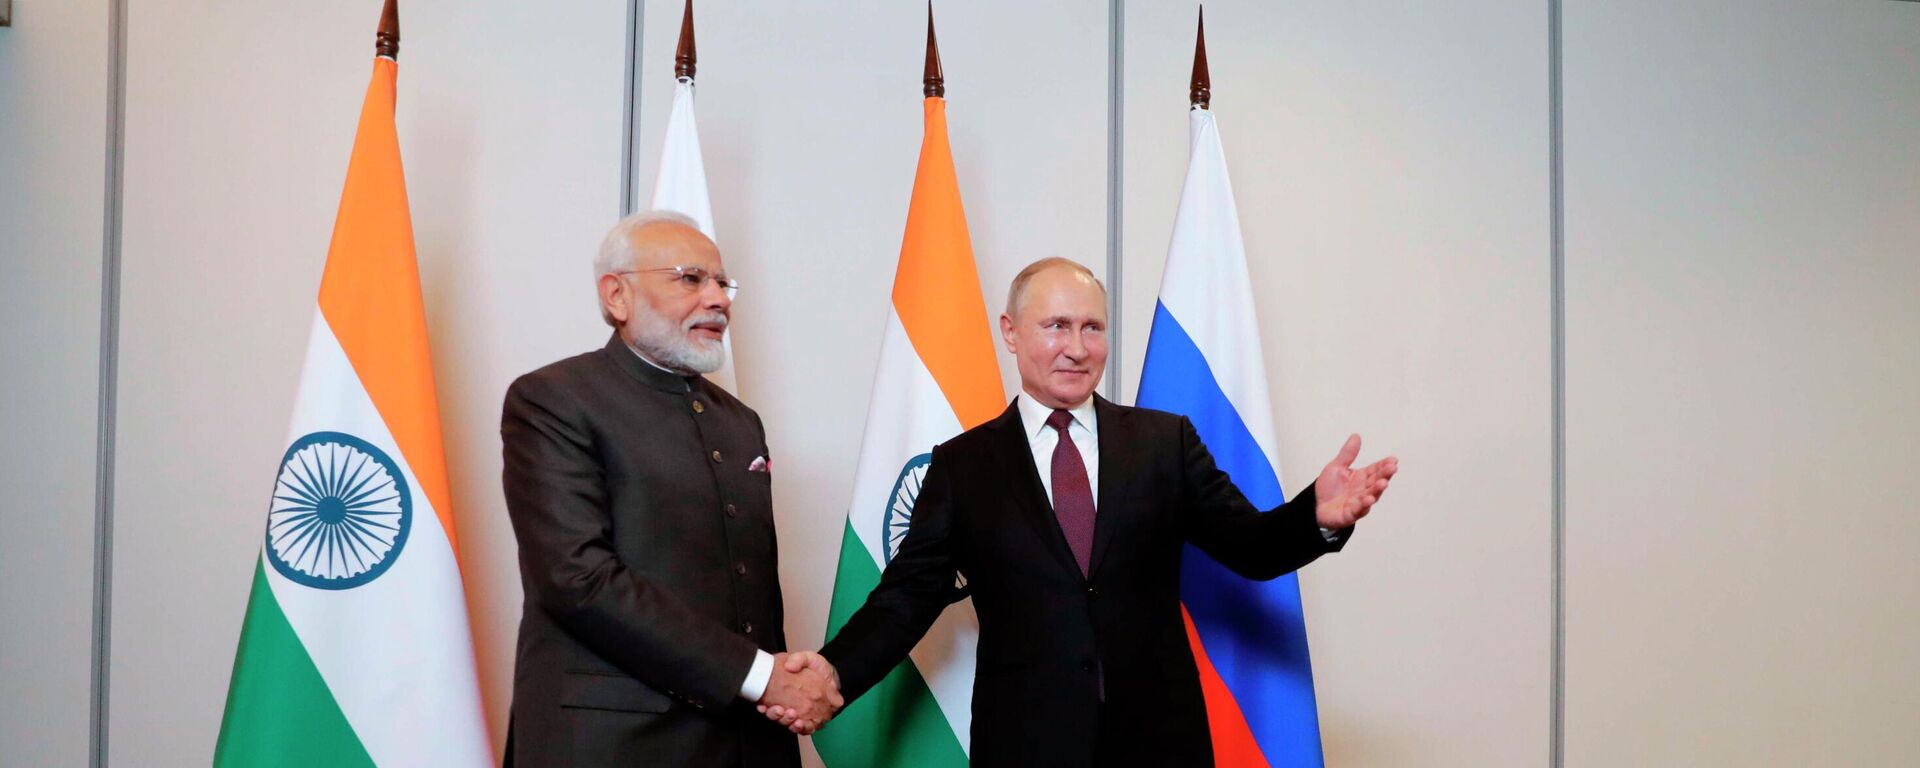 Президент РФ Владимир Путин и премьер-министр Индии Нарендра Моди (слева) во время встречи, фото из архива - Sputnik Азербайджан, 1920, 06.12.2021